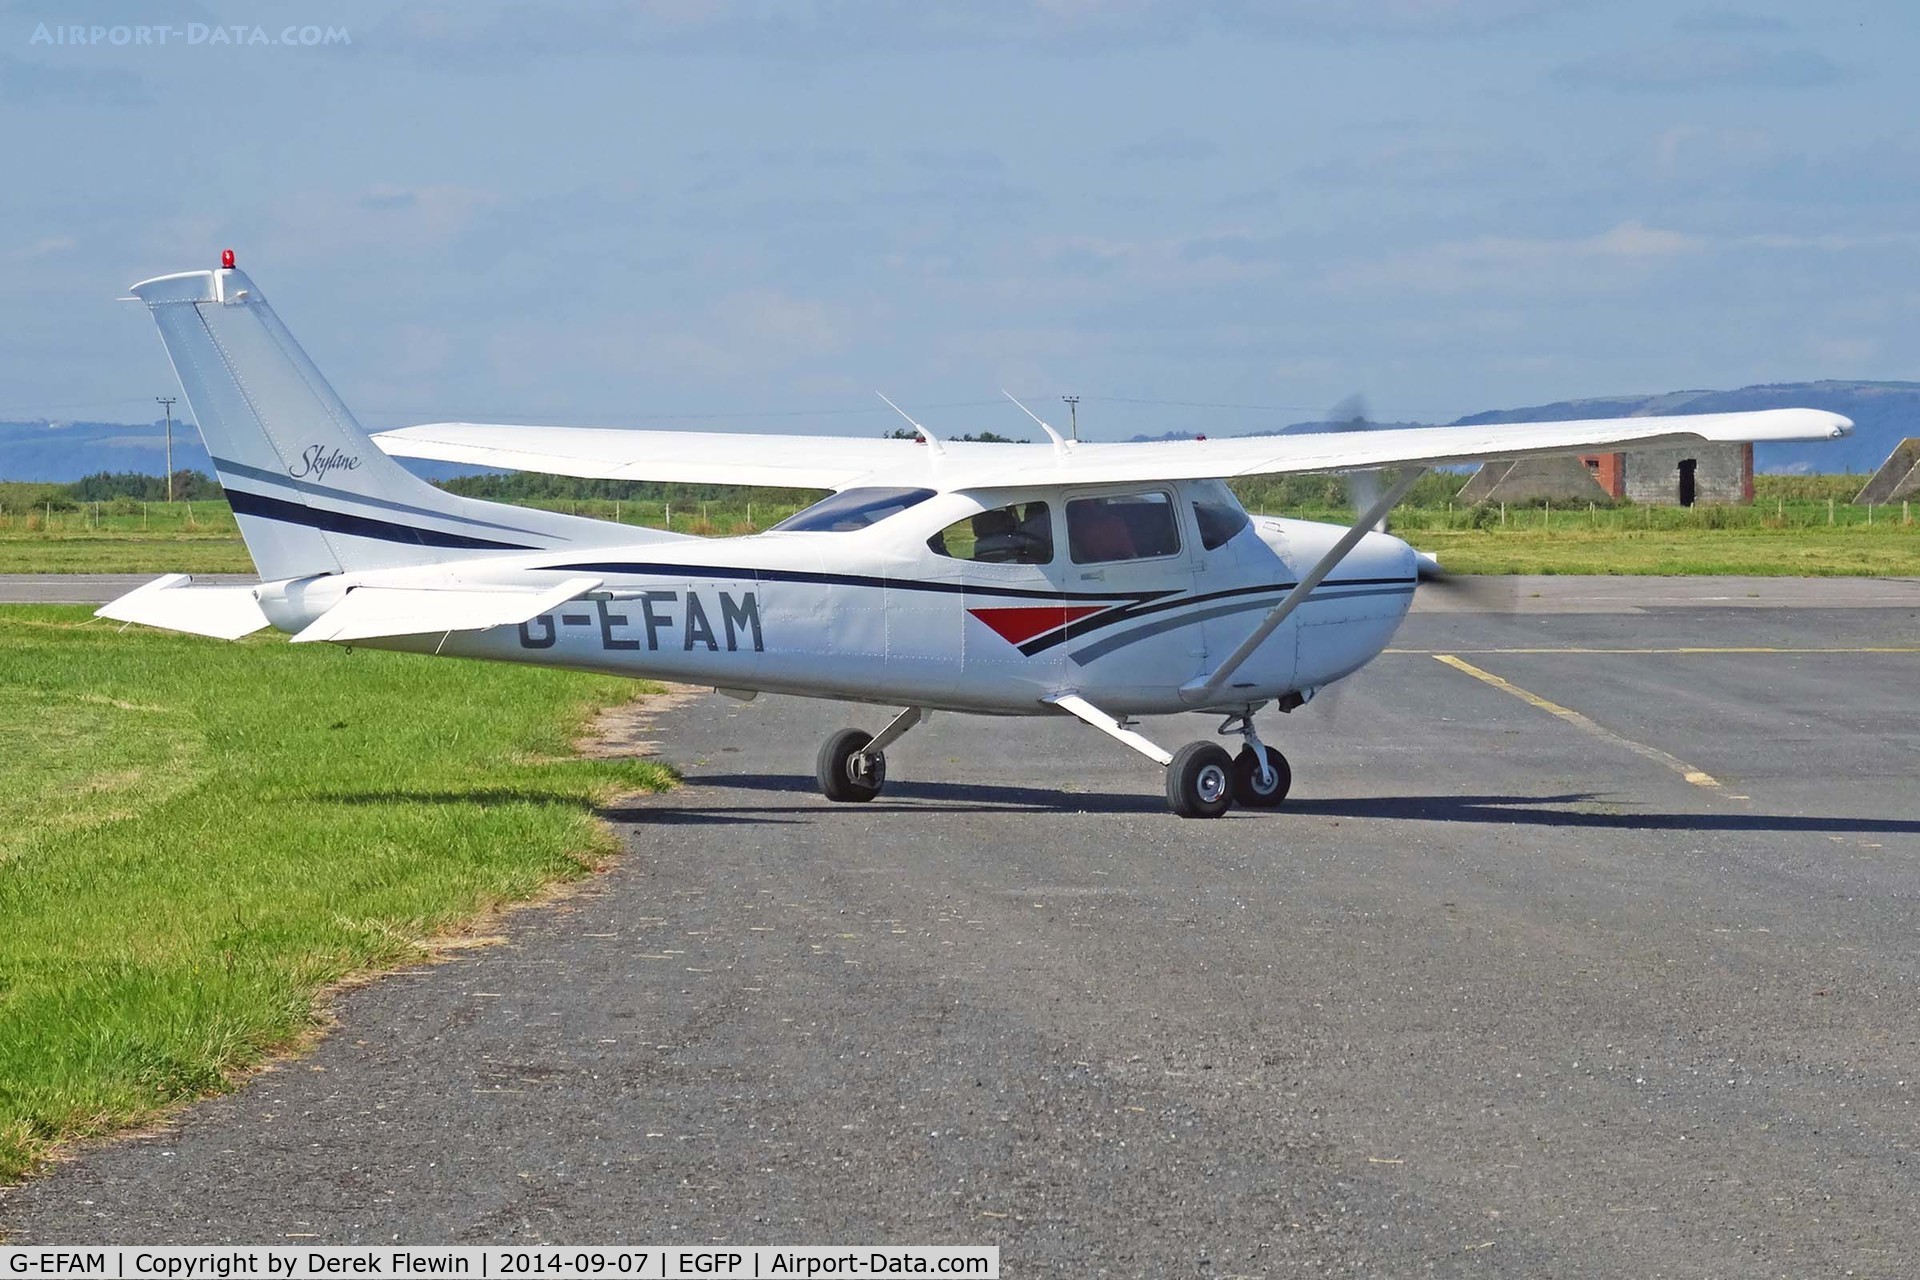 G-EFAM, 1999 Cessna 182S Skylane C/N 18280442, Visiting Skylane, previously, N14113, G-EFAM, Liverpool based, seen shortly after landing on runway 04 at EGFP.